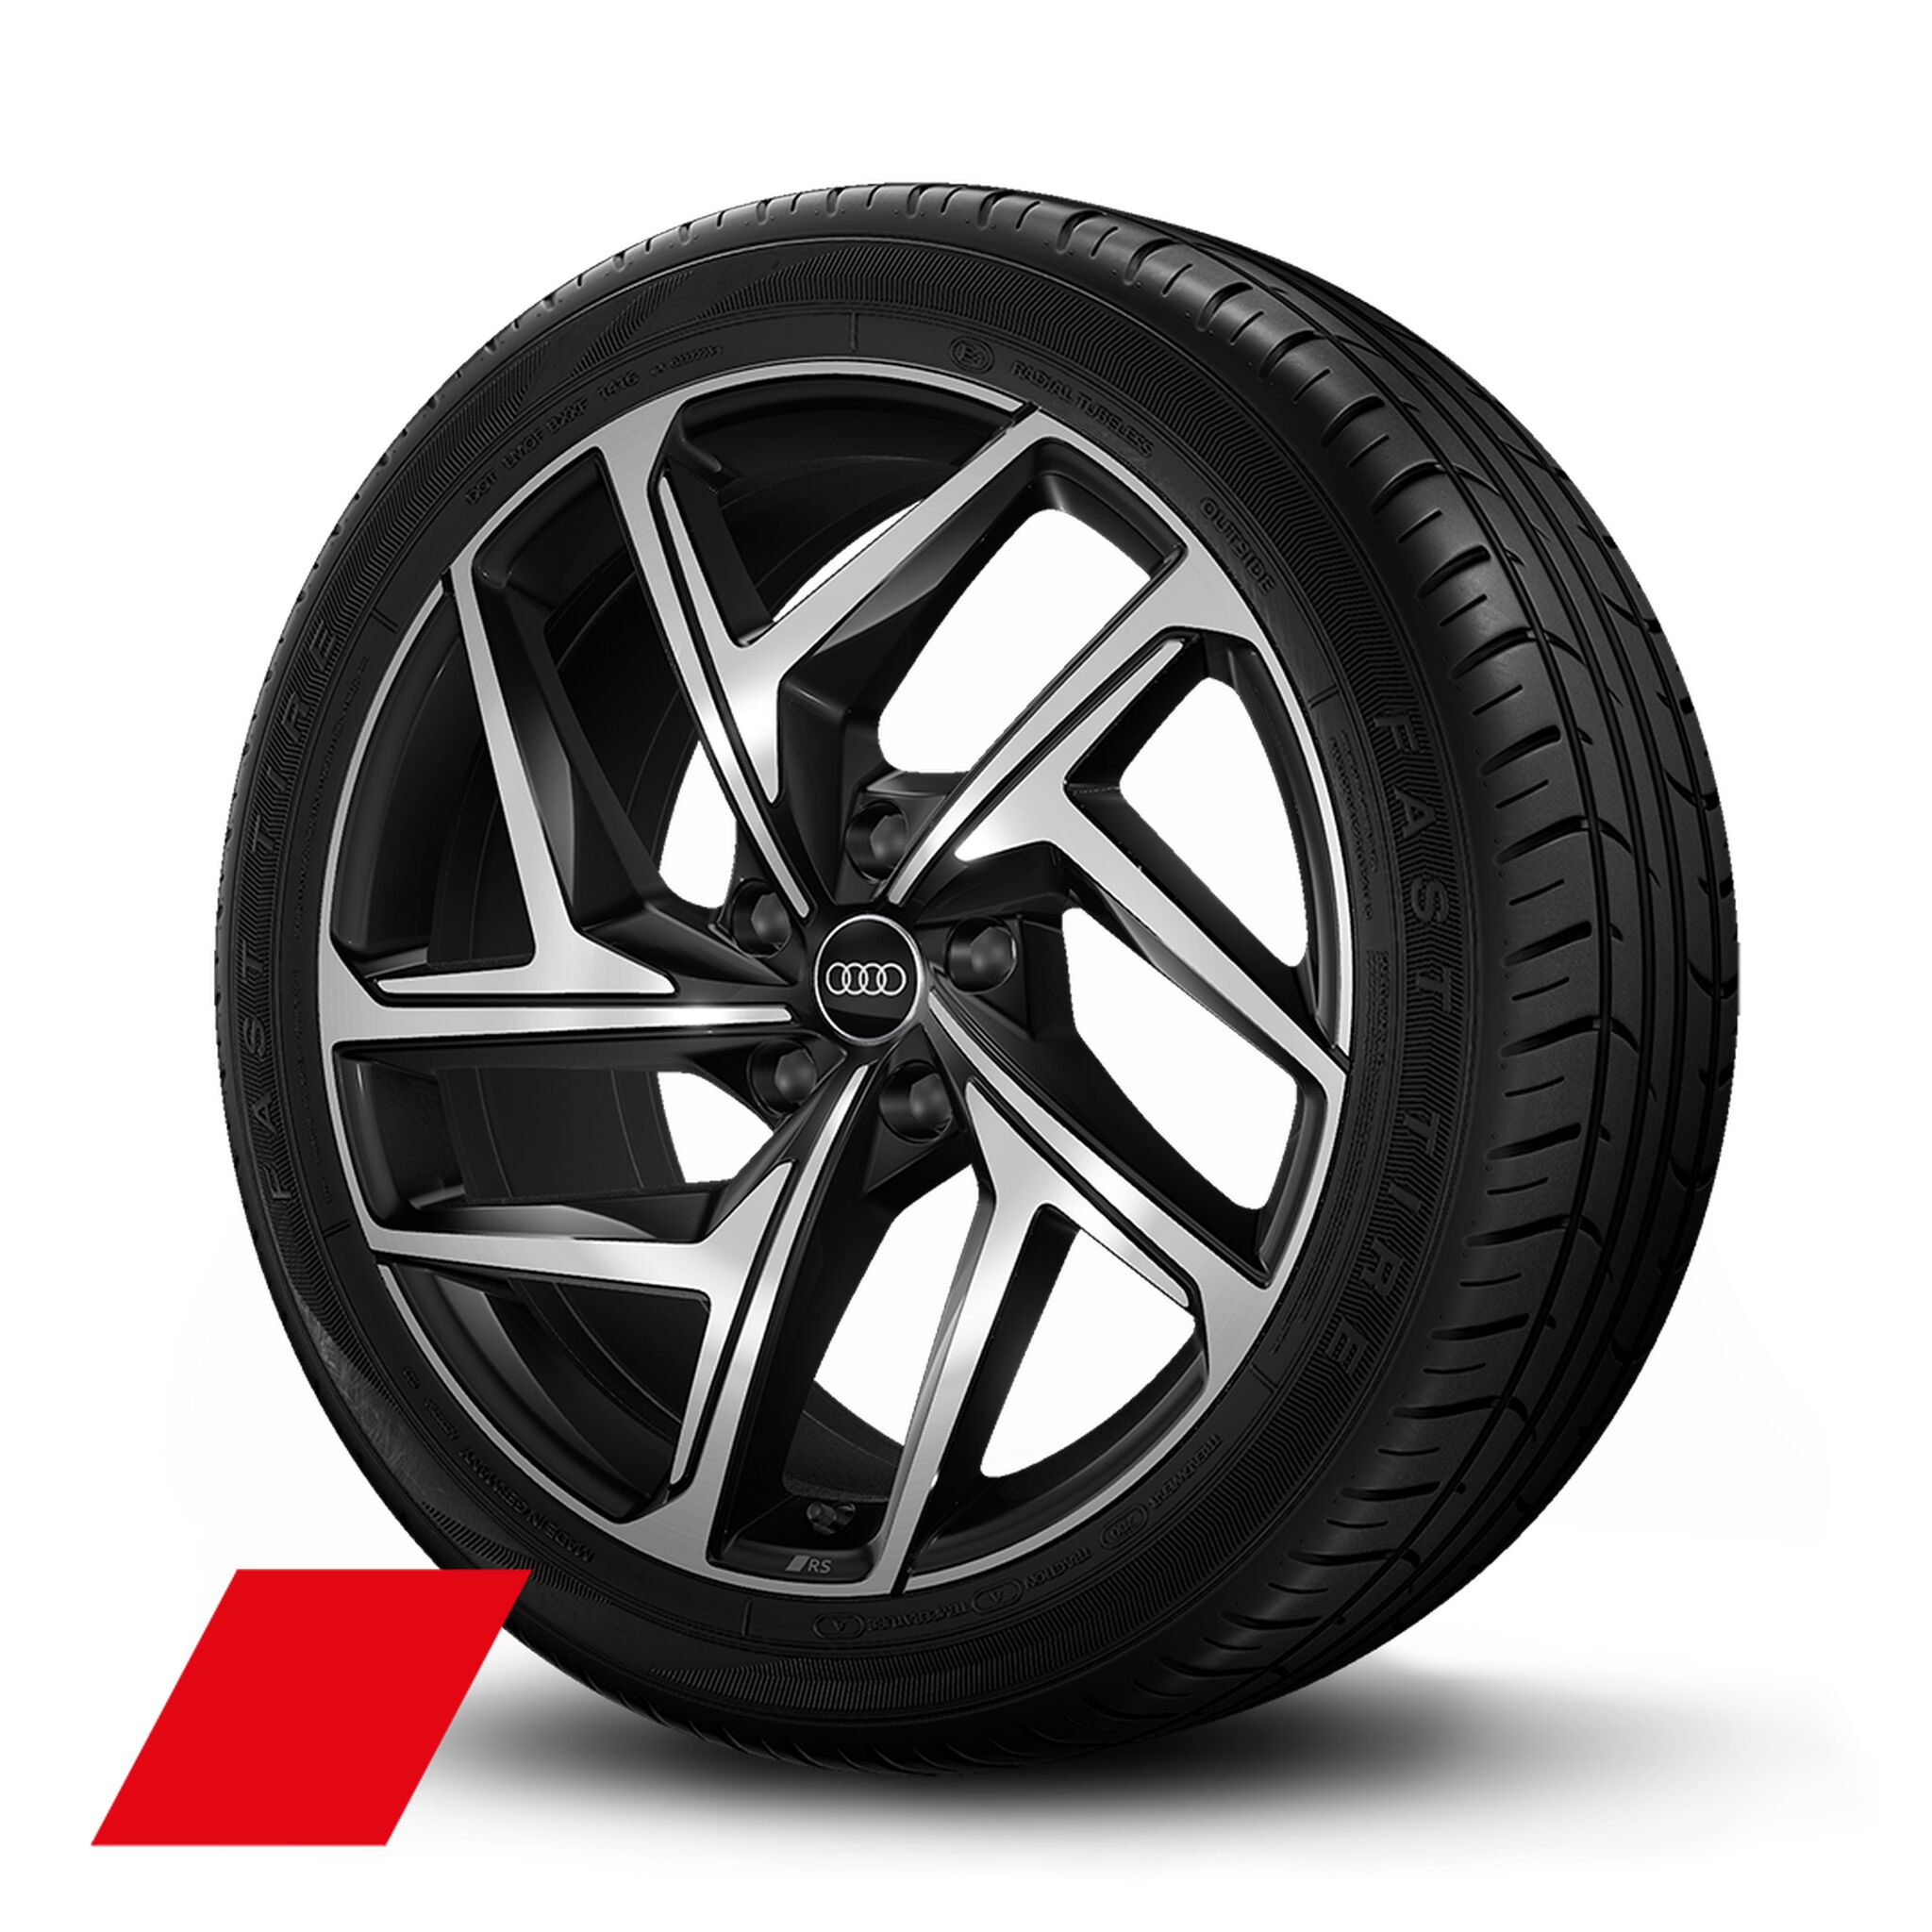 Audi Sport wheels, 5-Y-spoke dynamic, black metallic, high-sheen, 9.0J|10.0Jx21, tires 255/45|285/40 R21